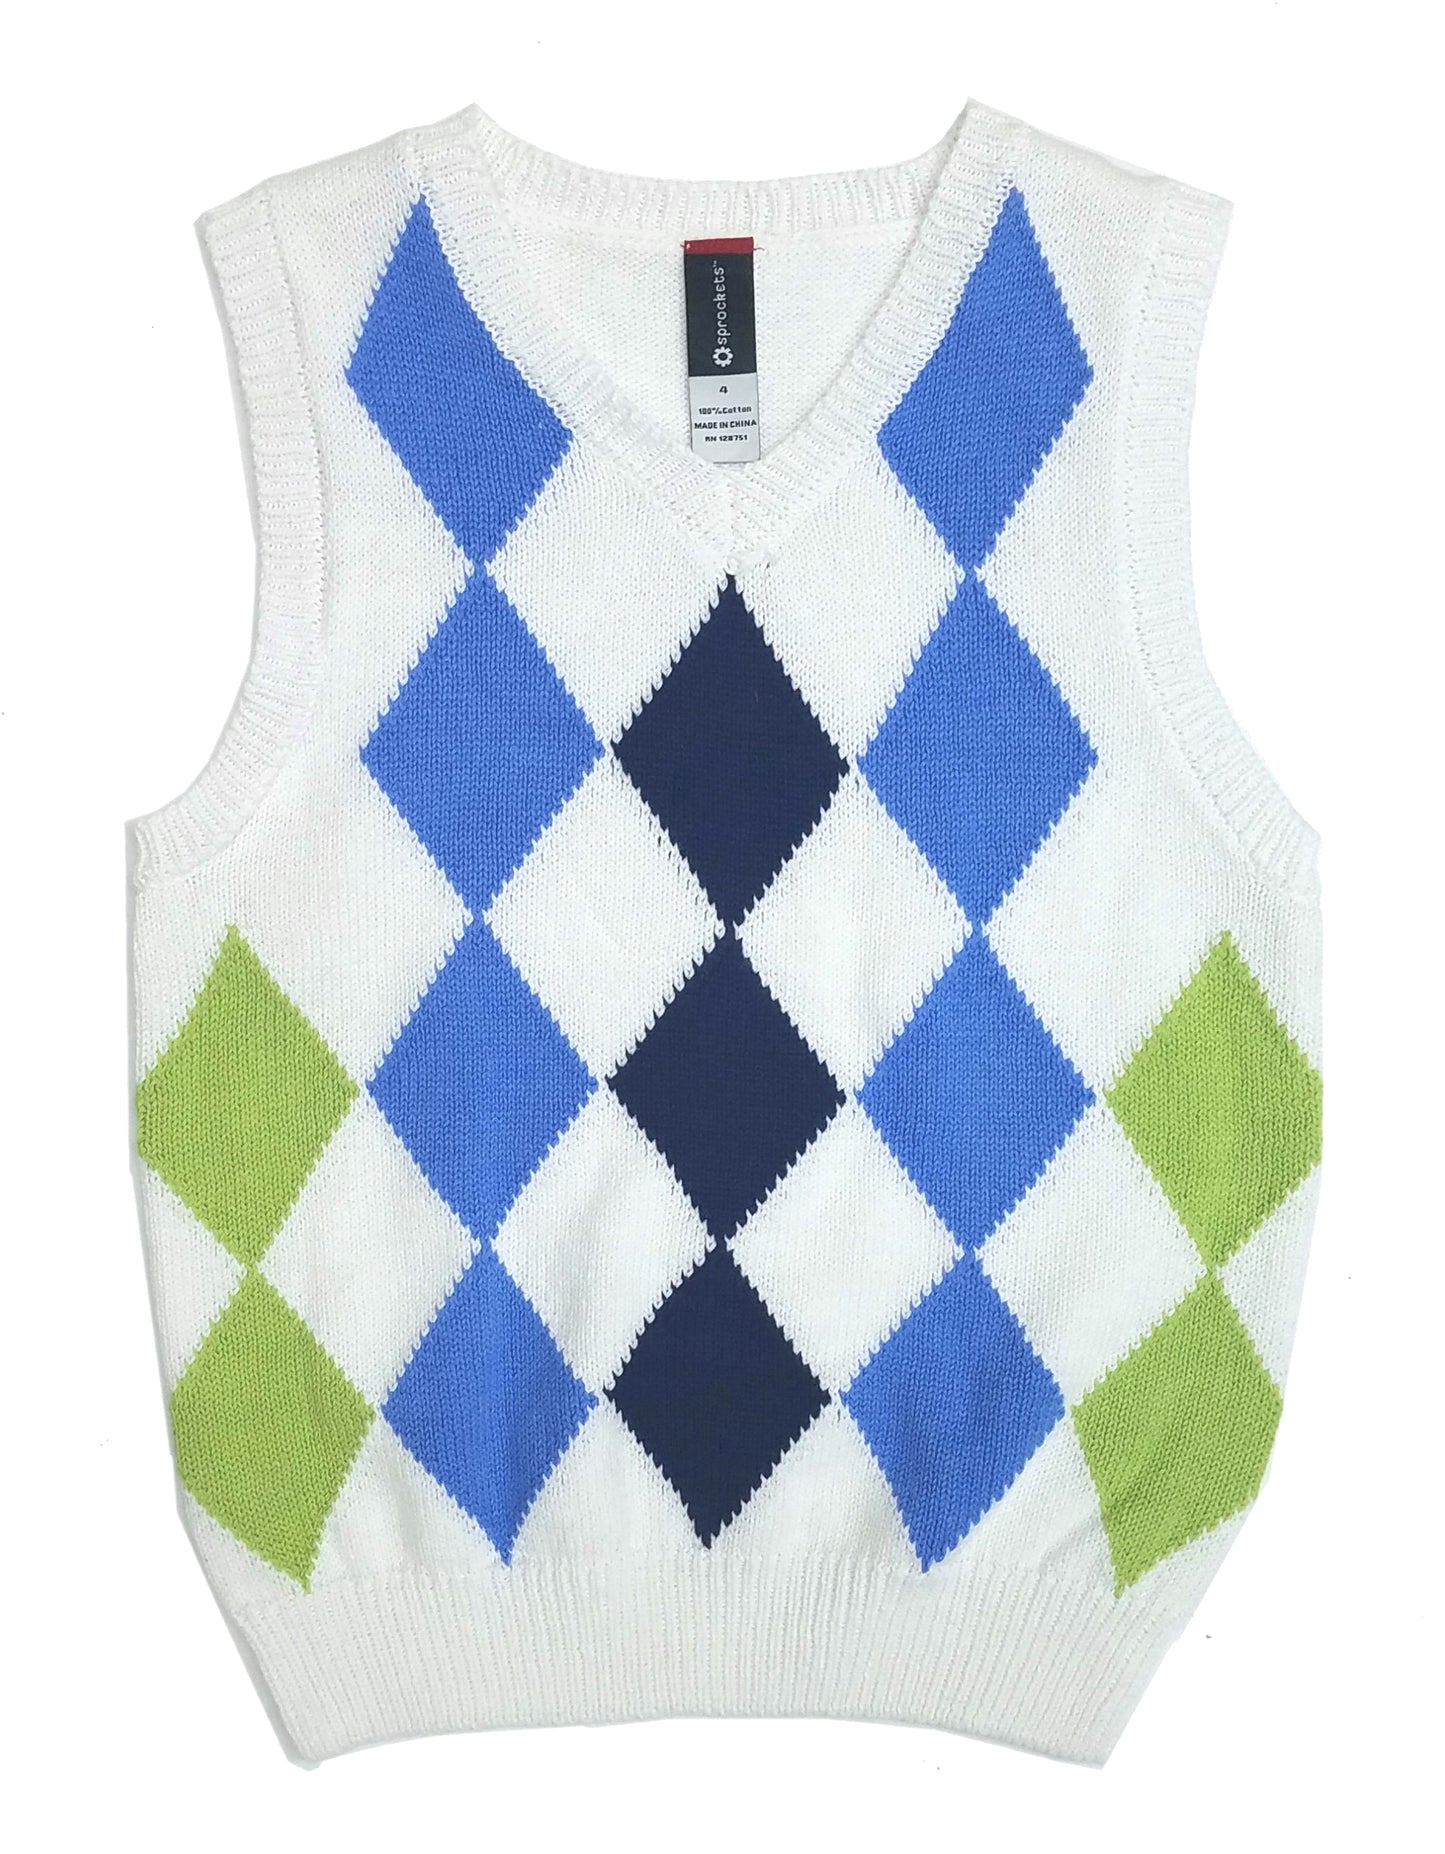 Sweater Boys Vest Blue Argyle Knit V Neck Pullover -Sprockets Vest